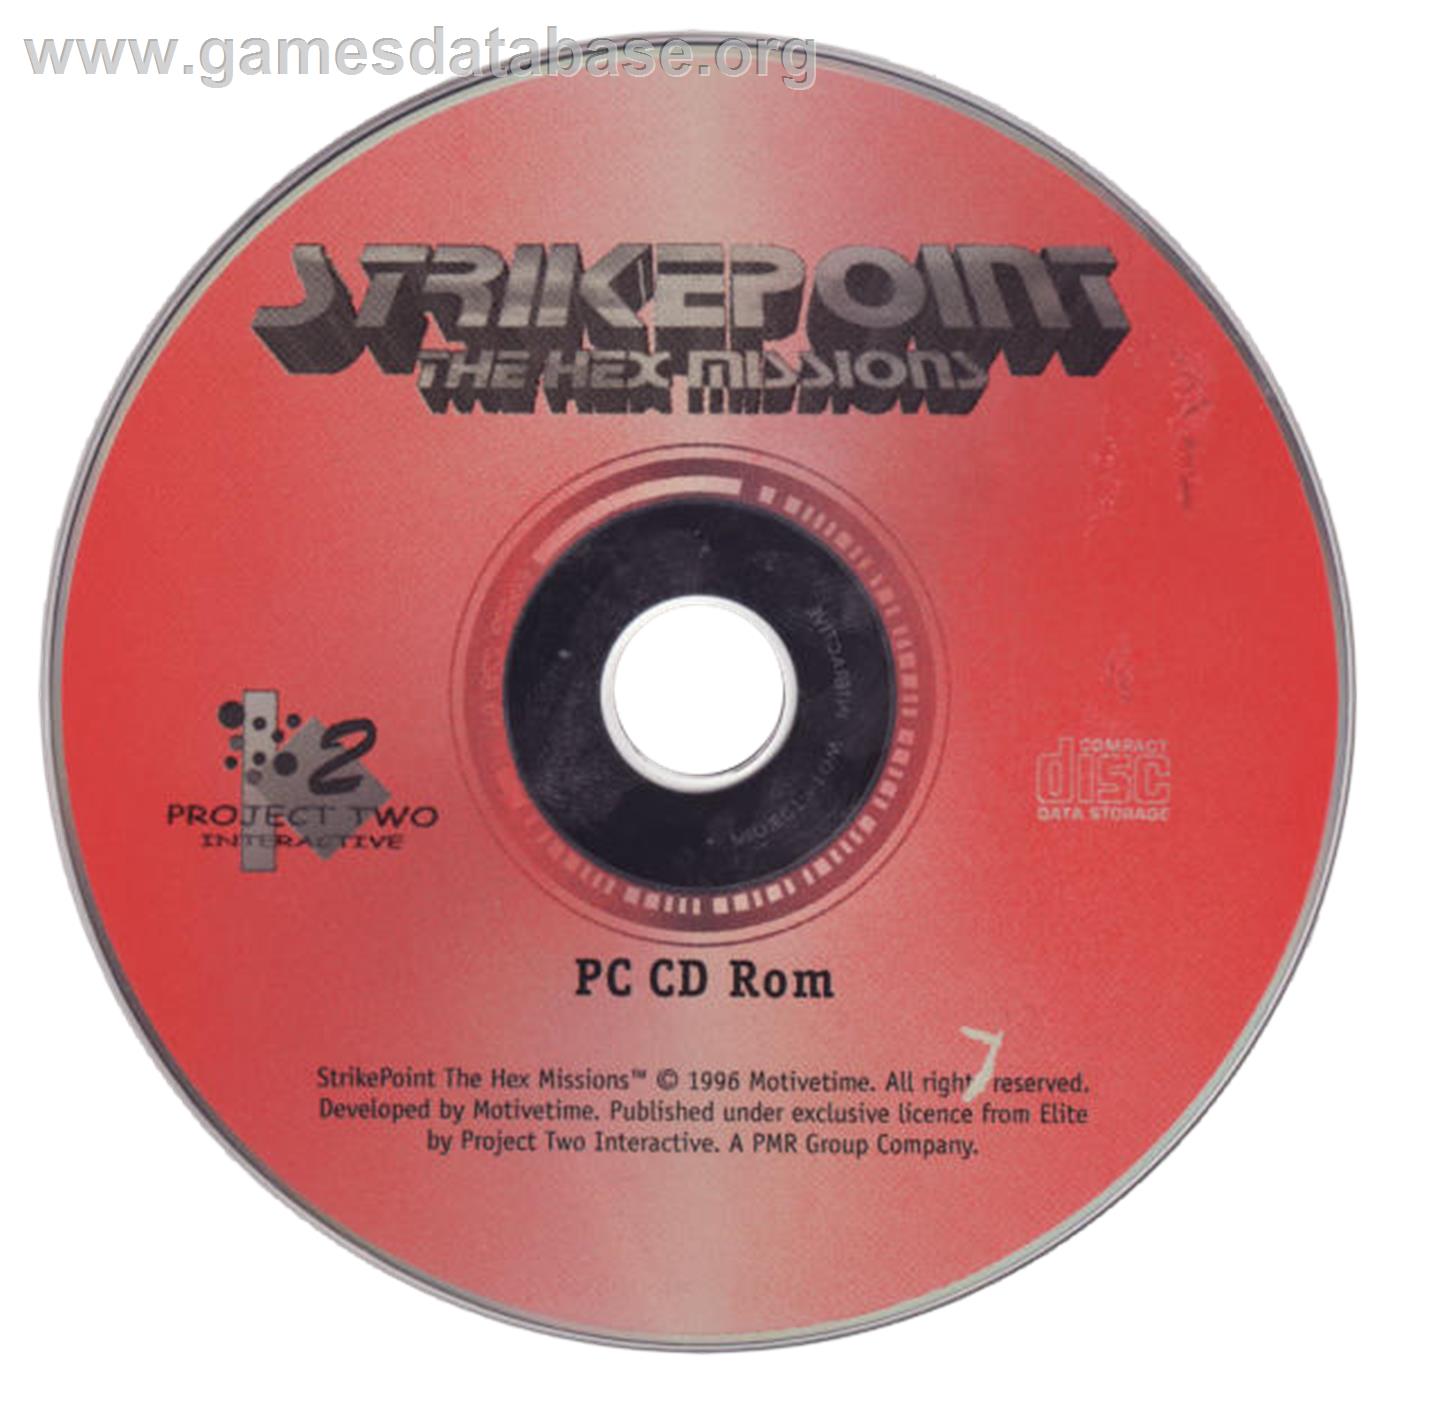 StrikePoint - Microsoft DOS - Artwork - Disc